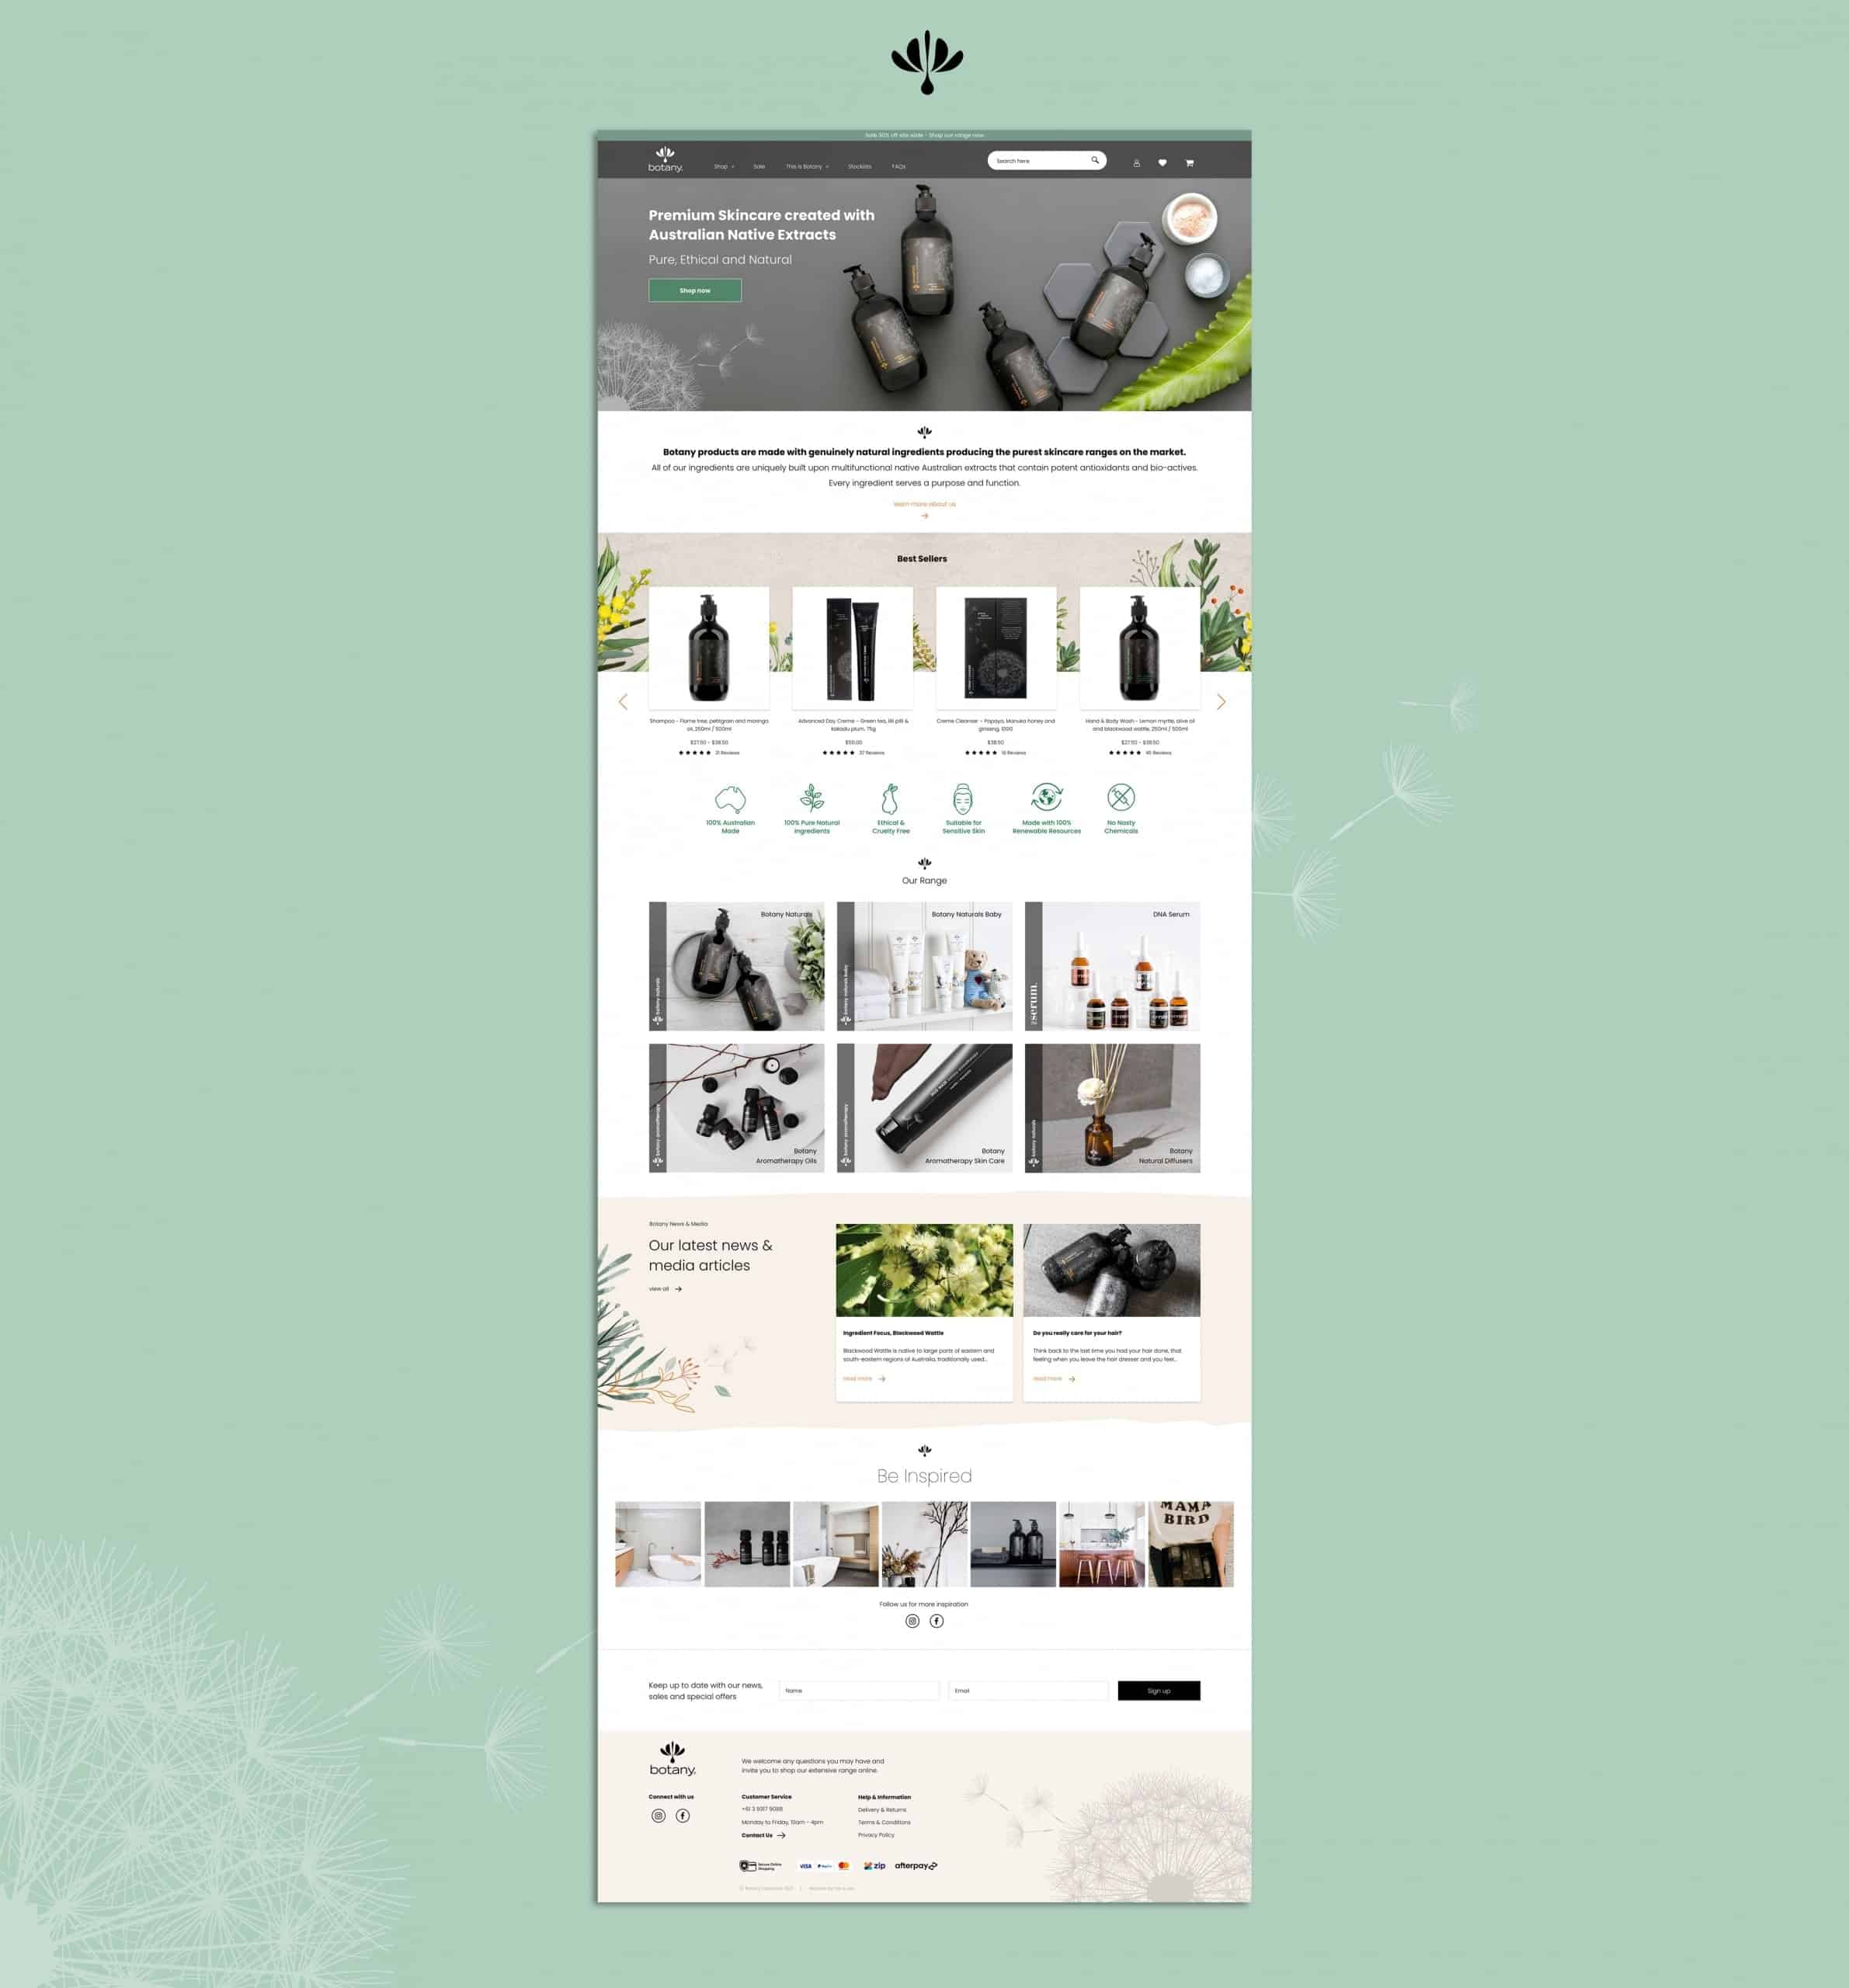 ecommerce-website-design